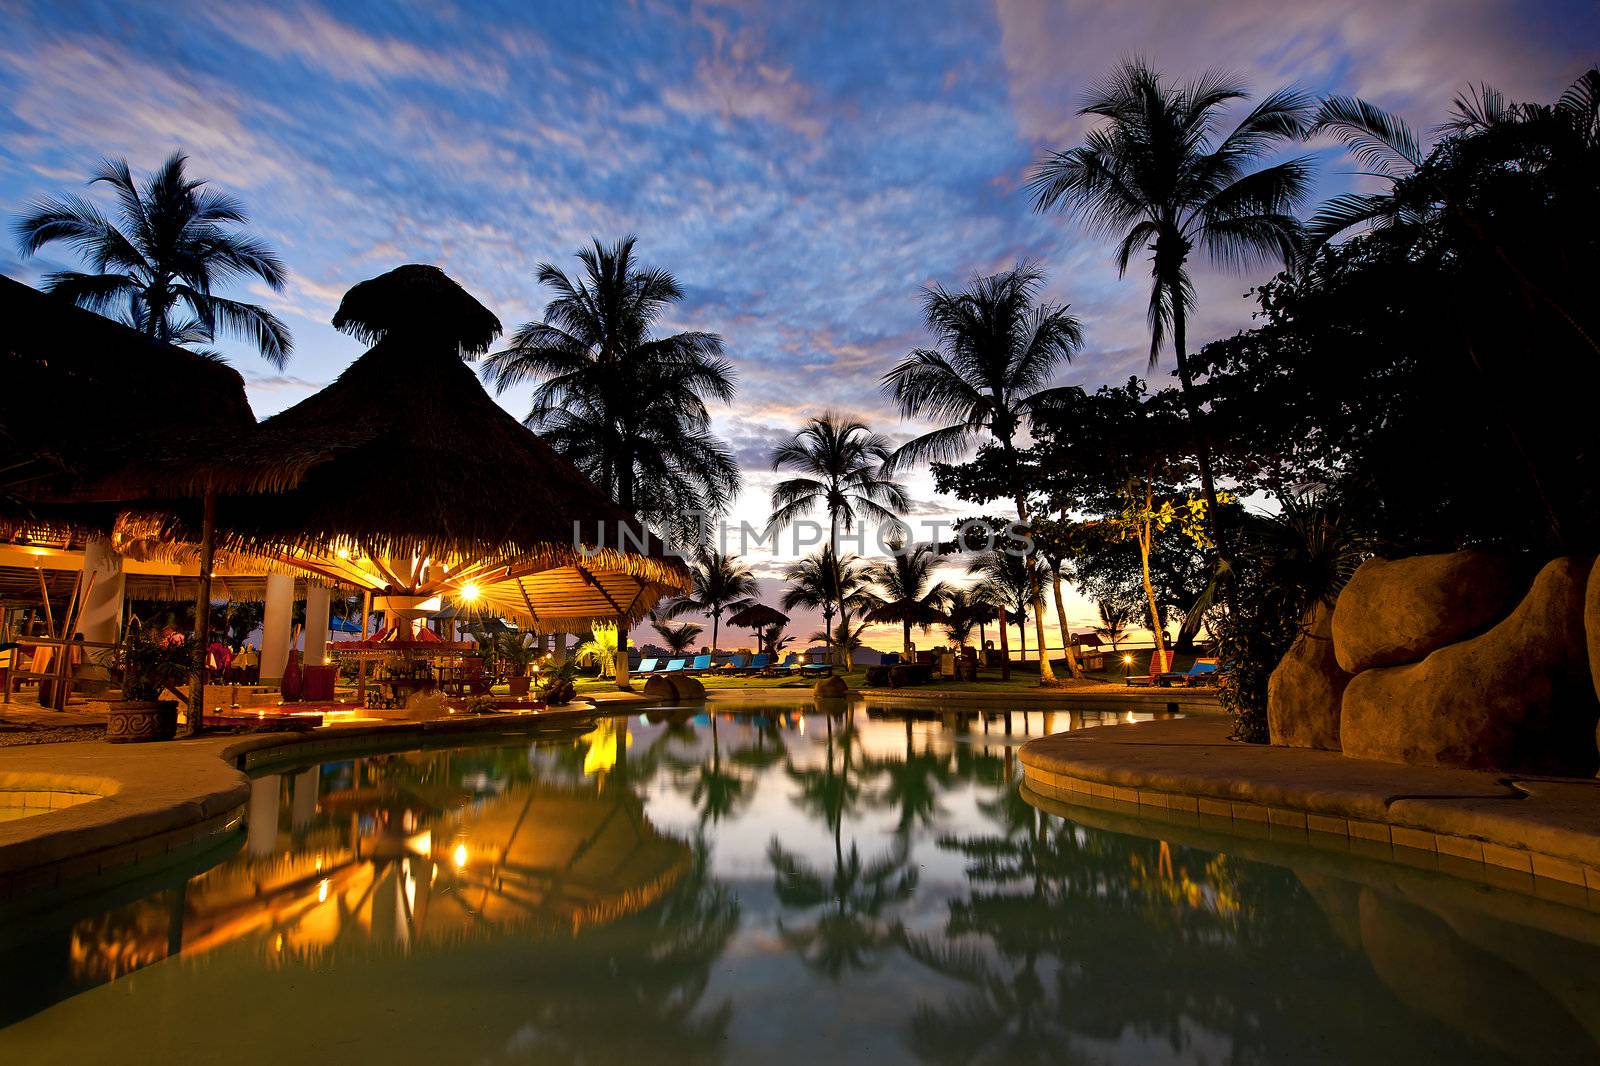 Costa Rica resort by kjorgen